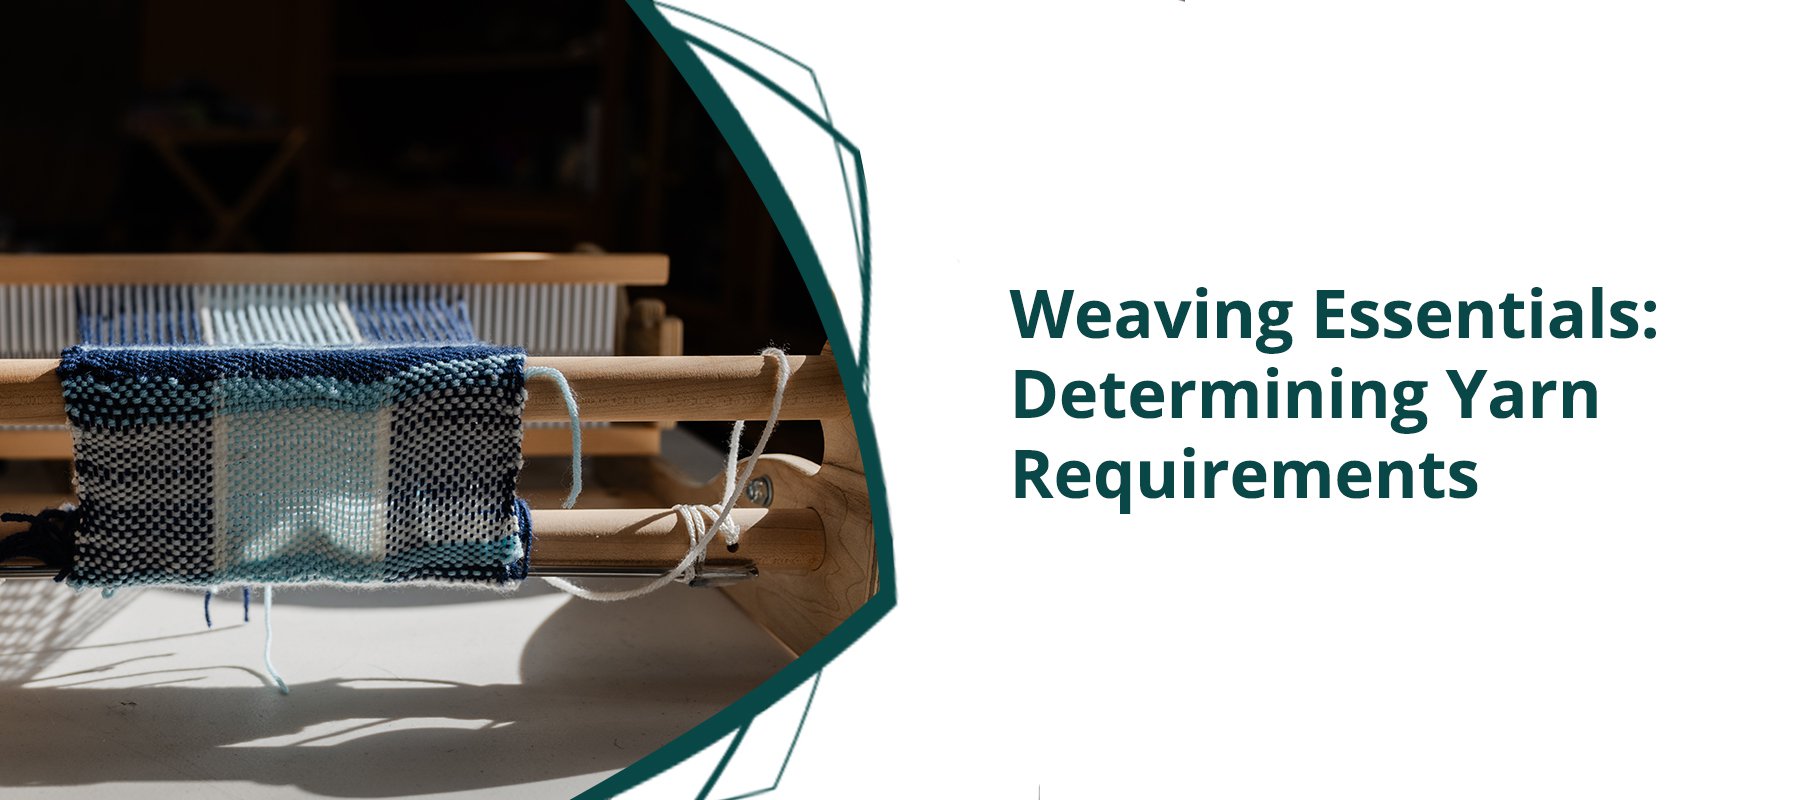 Weaving Essentials: Determining Yarn Requirements